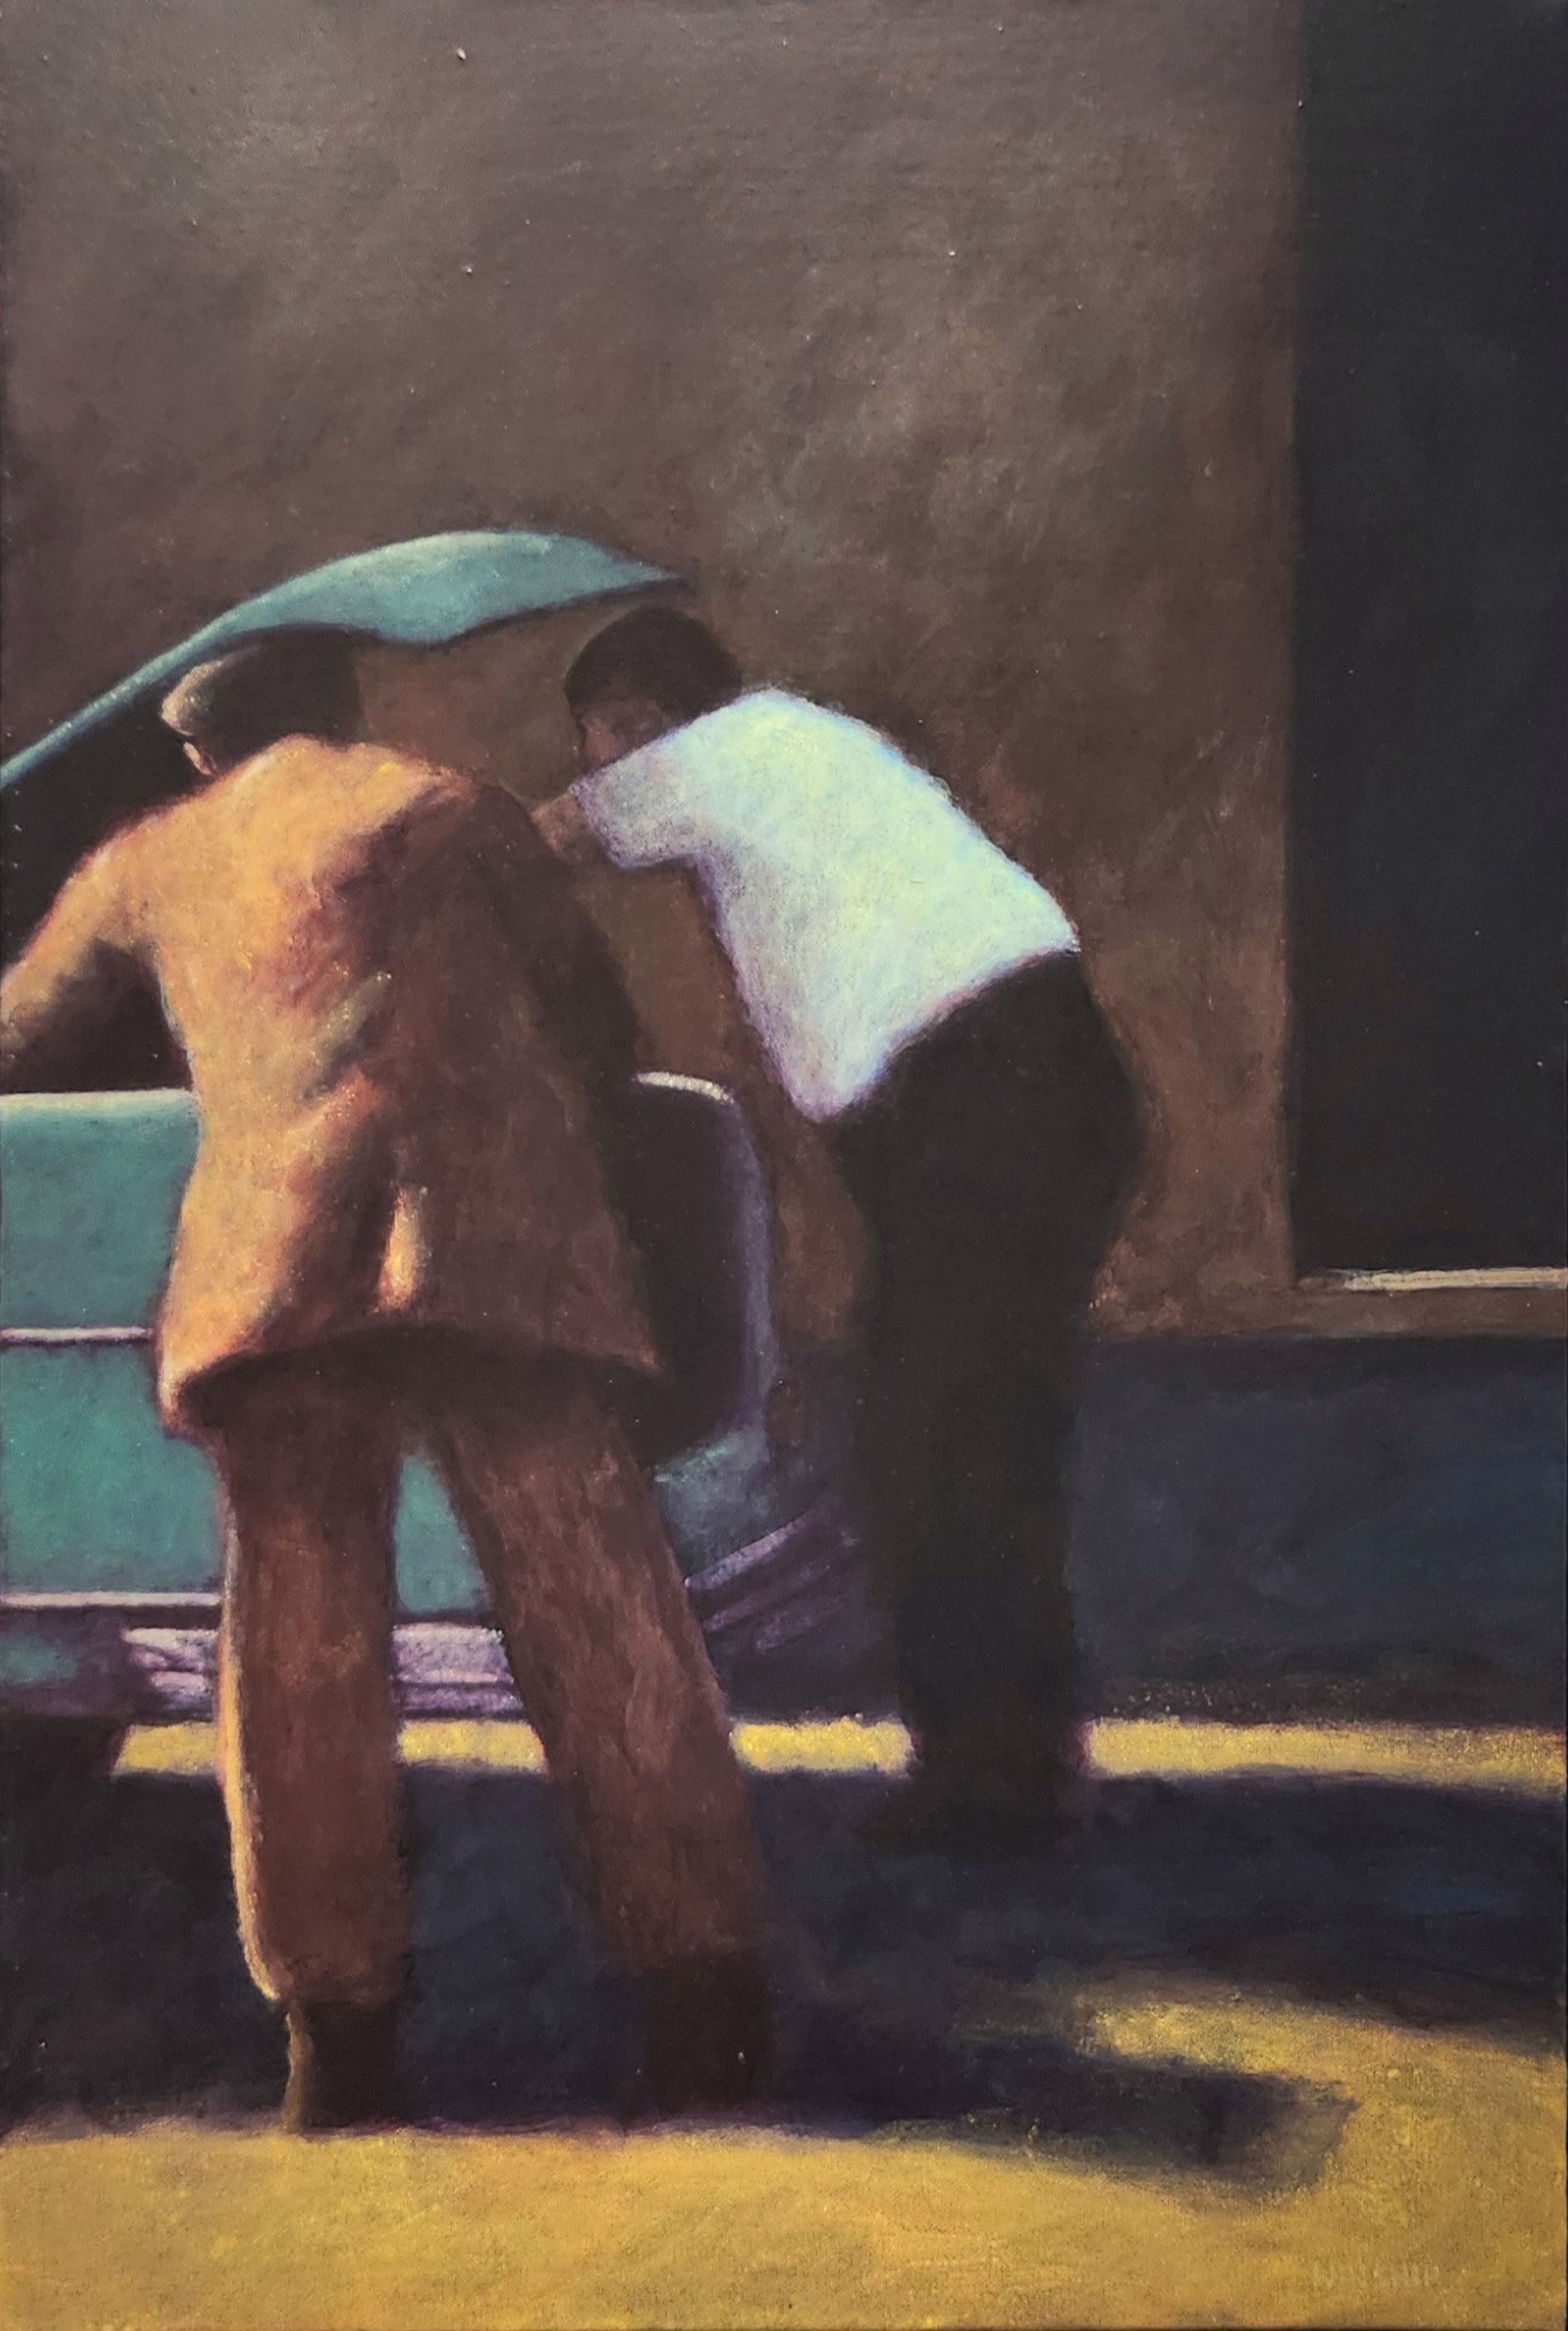 TWO MEN (CAR TRUNK) by JOHN WINSHIP